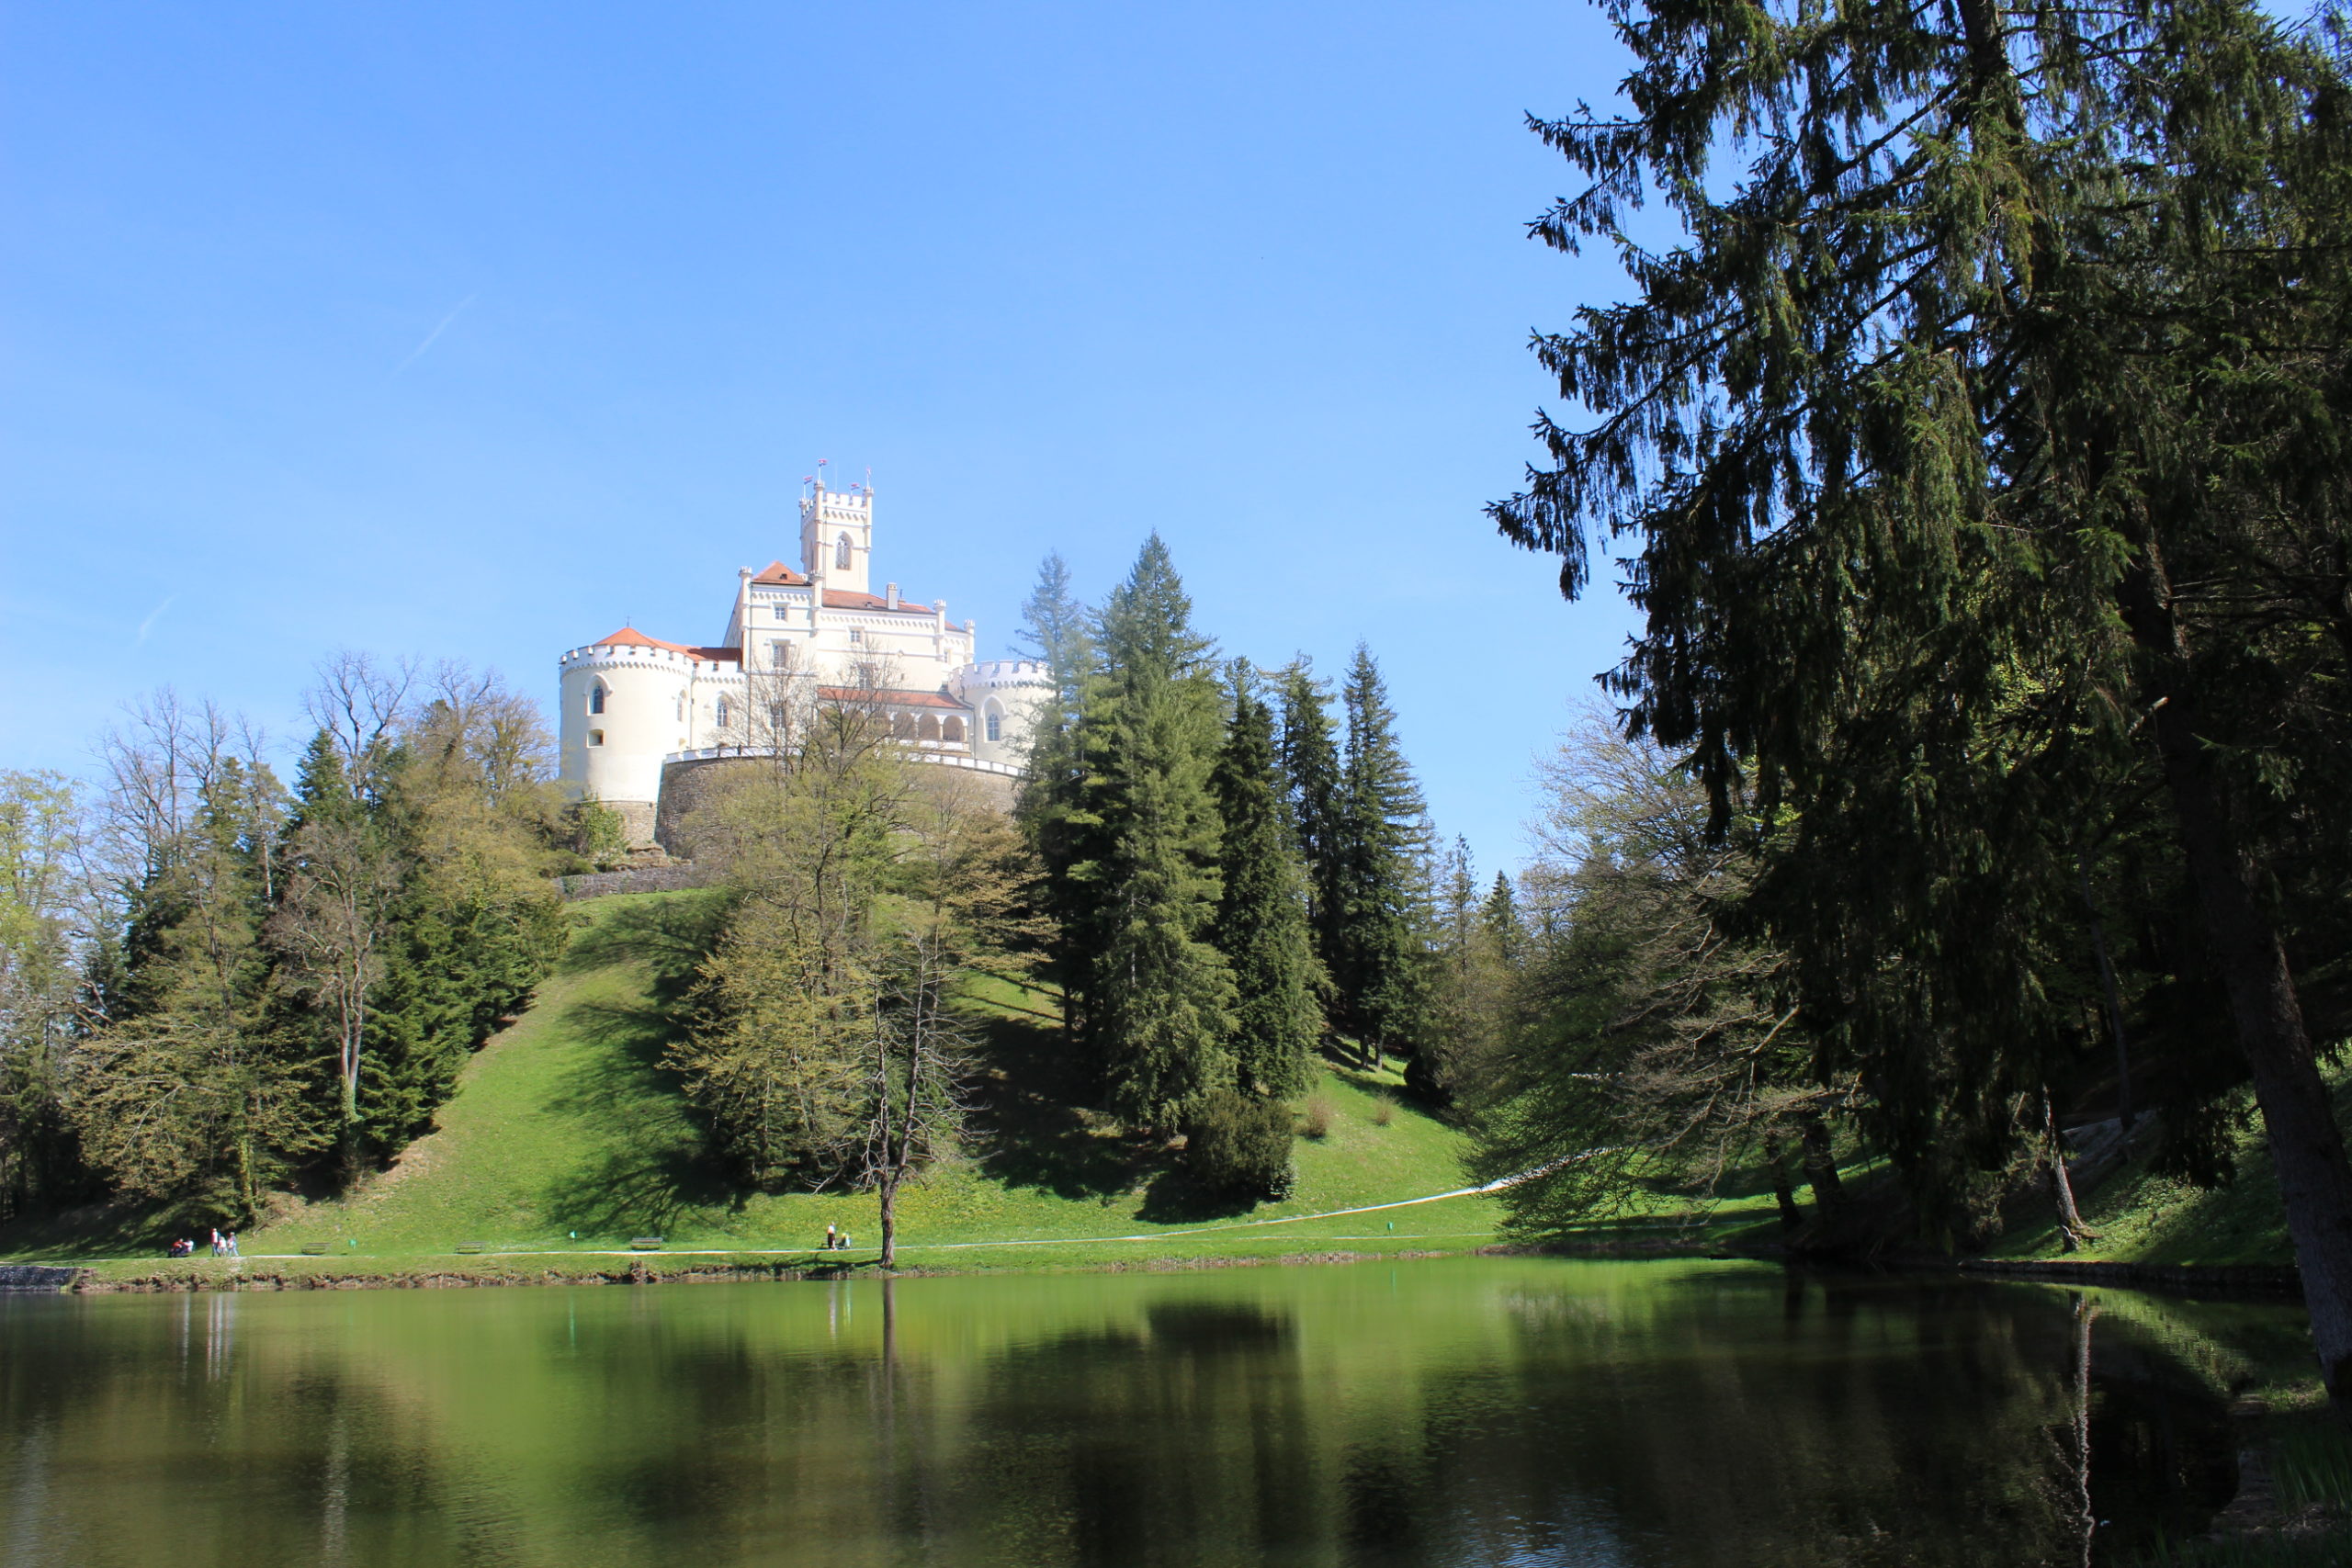 Trakoscan castle - the most beutiful castle in Southern Europe